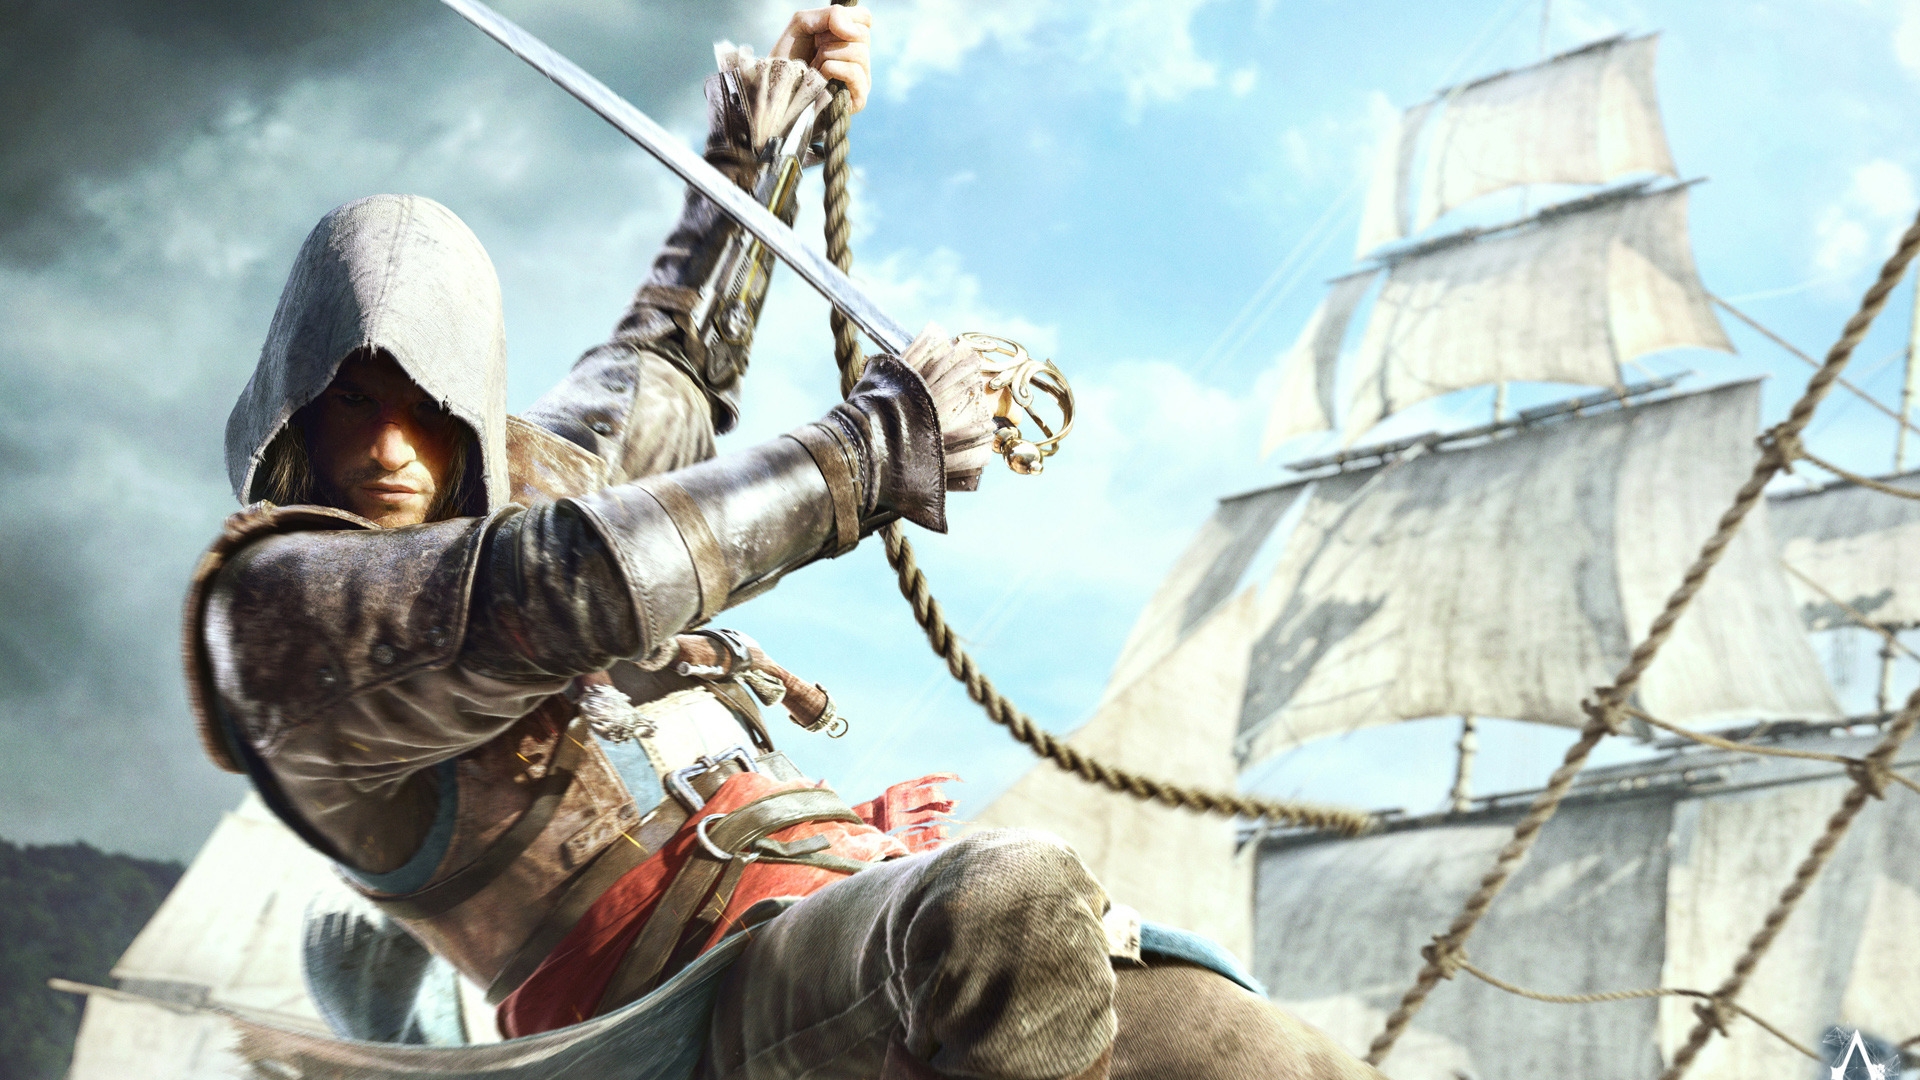 Assassin Creed 4 Black Flag for 1920 x 1080 HDTV 1080p resolution